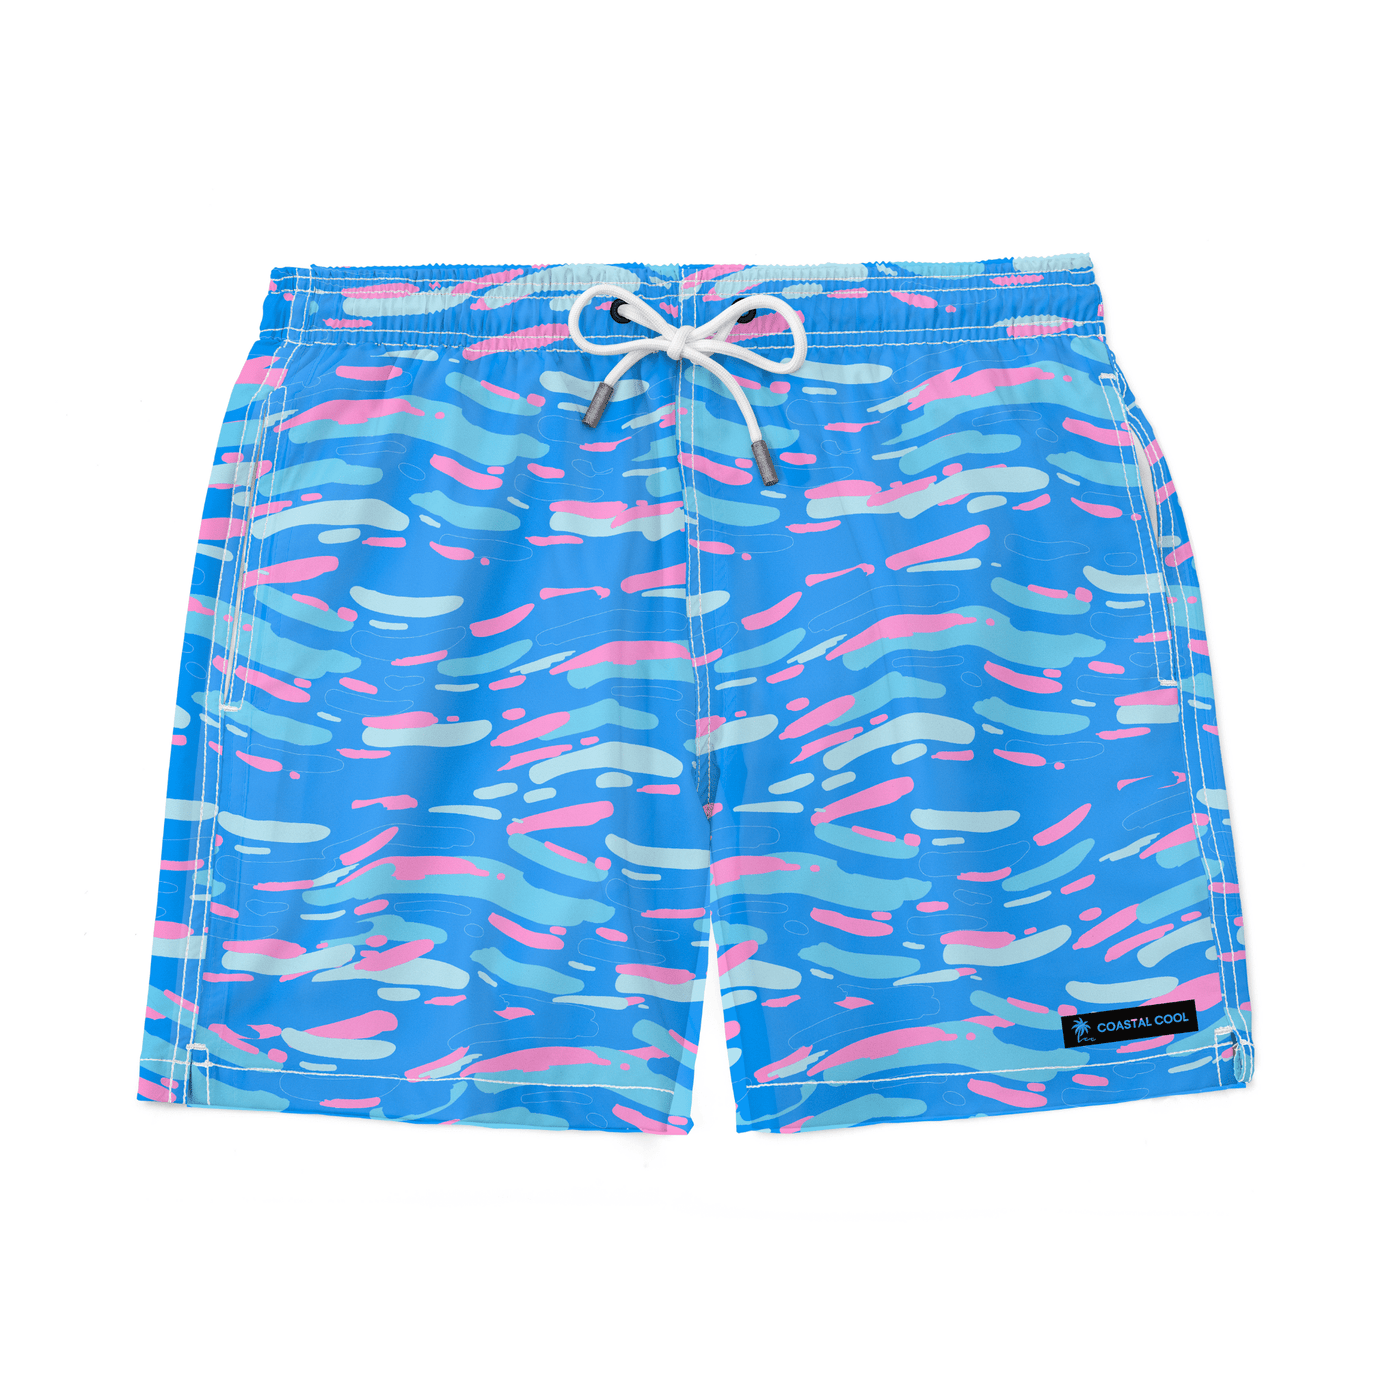 Destin Nights Swim Trunks - Coastal Cool - Swimwear and Beachwear - Recycled fabrics